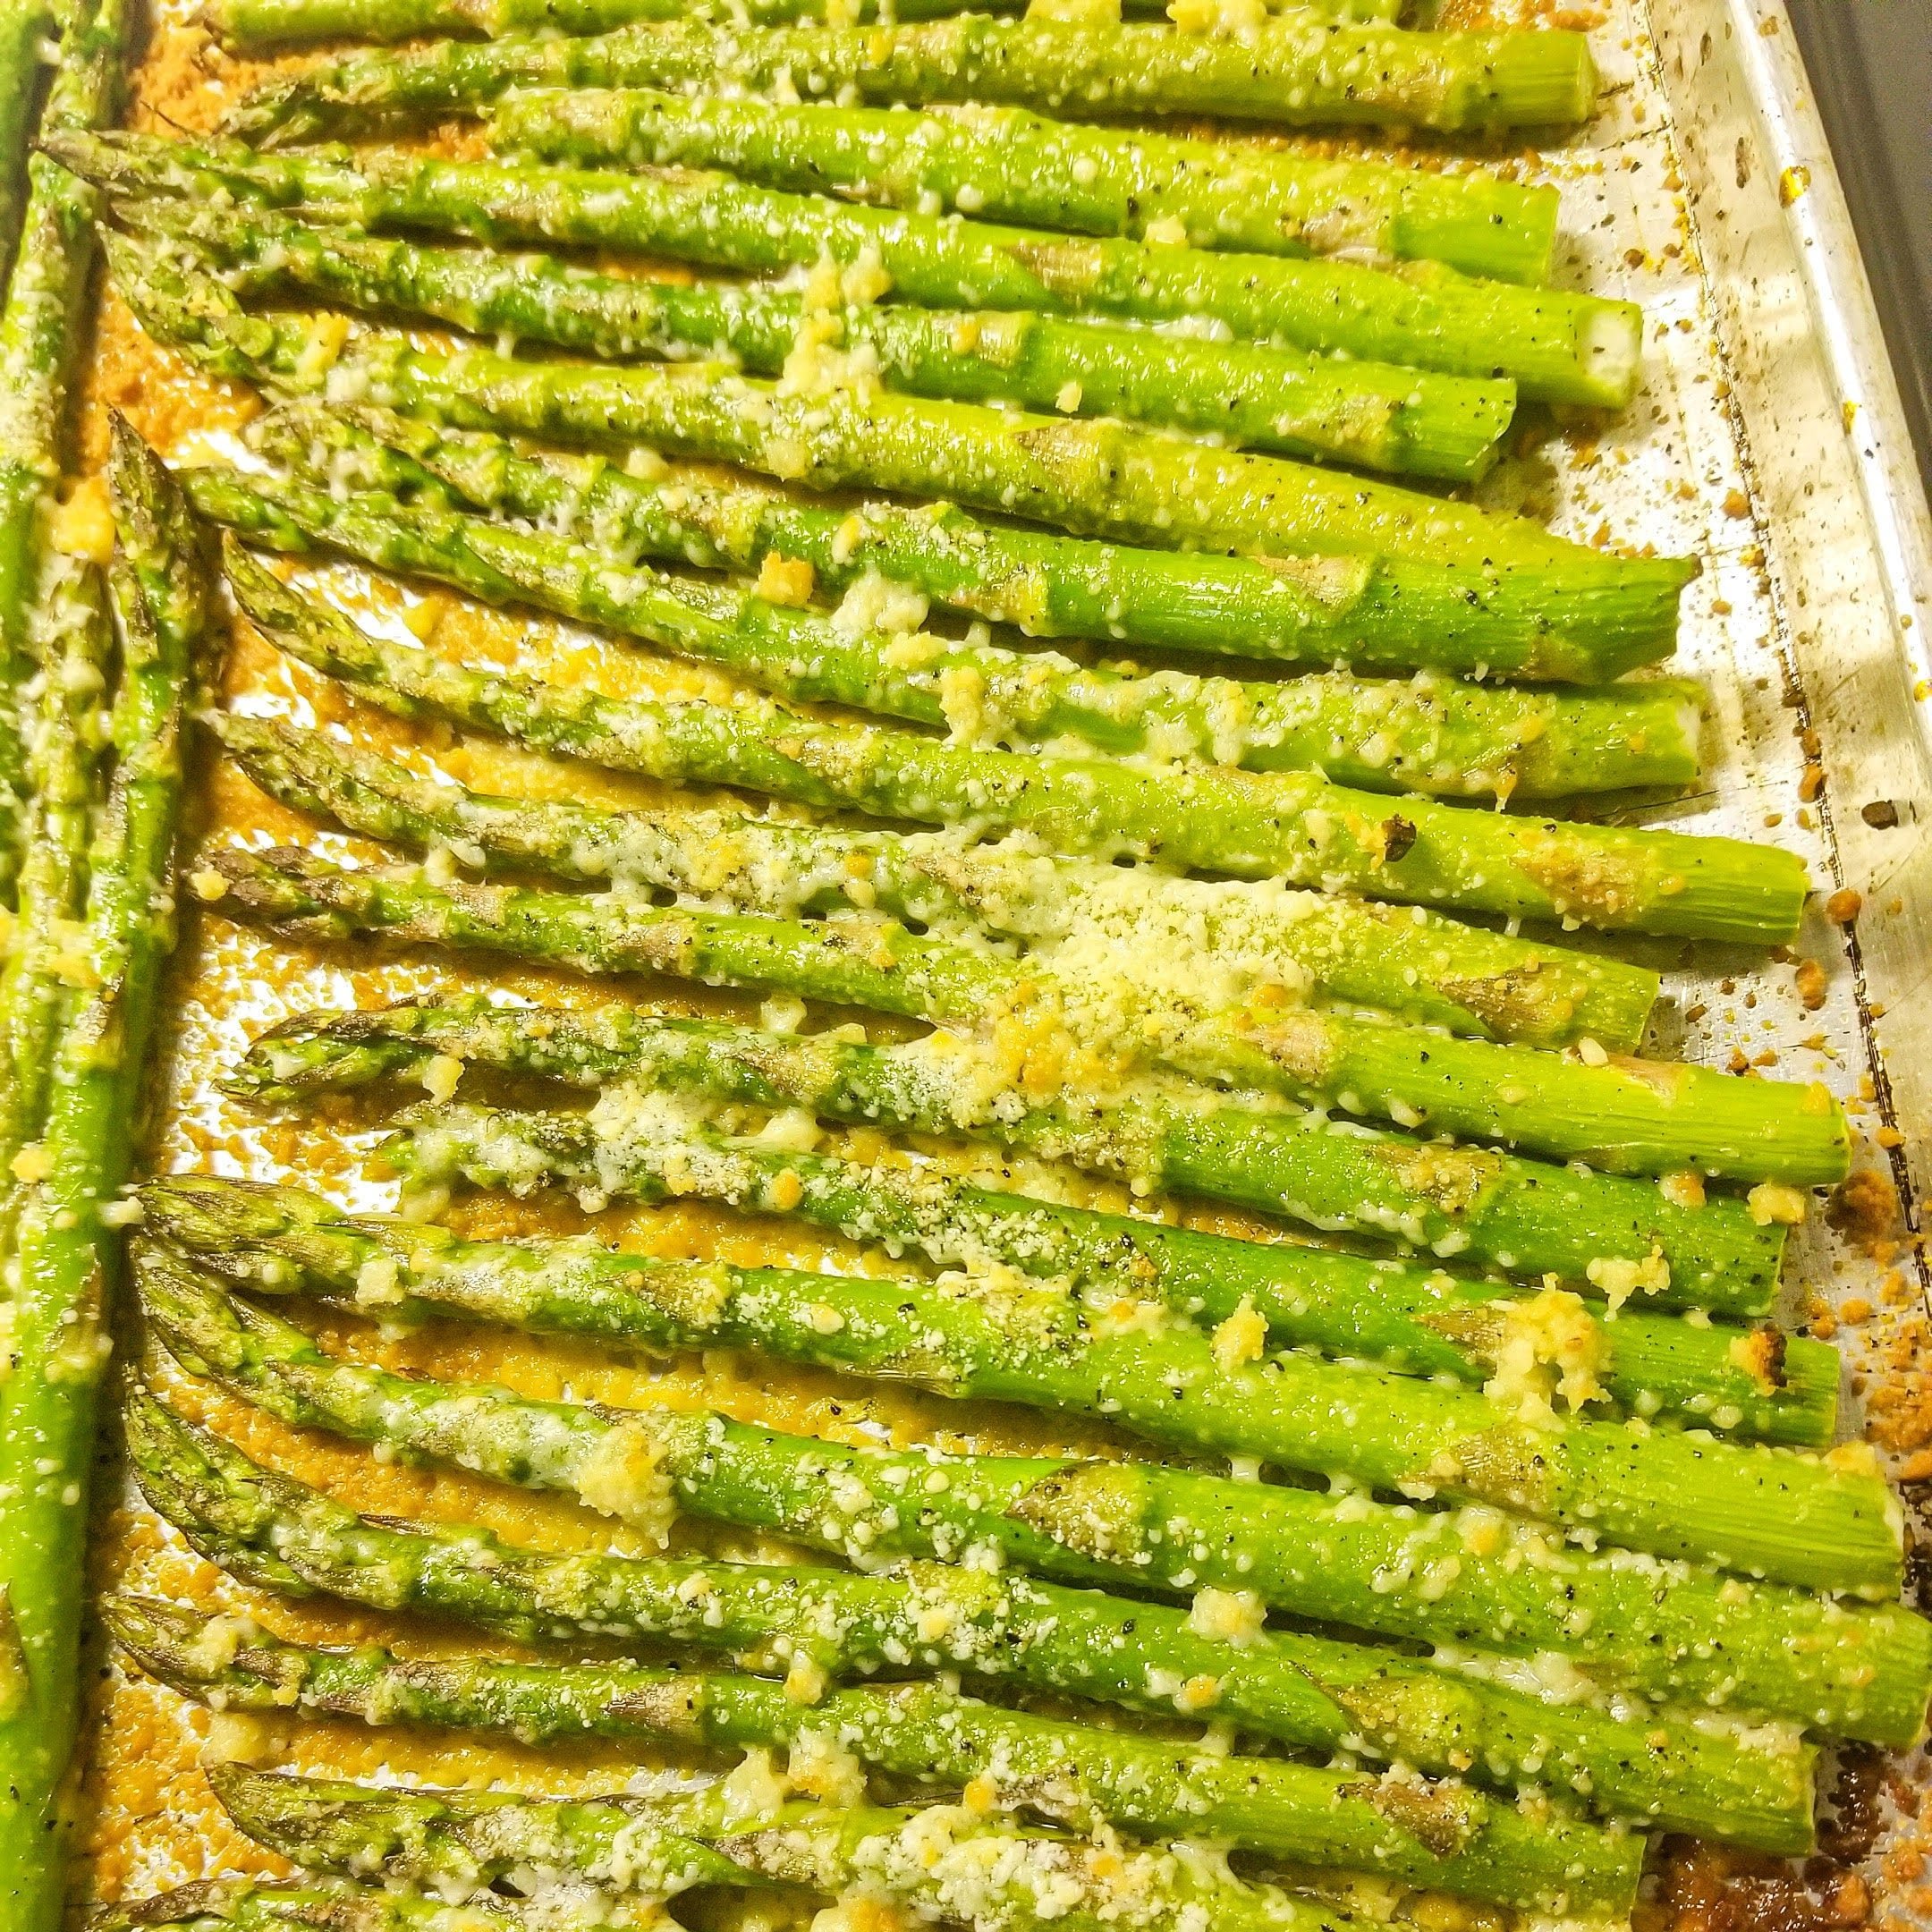 garlic parmesan asparagus on a baking sheet.